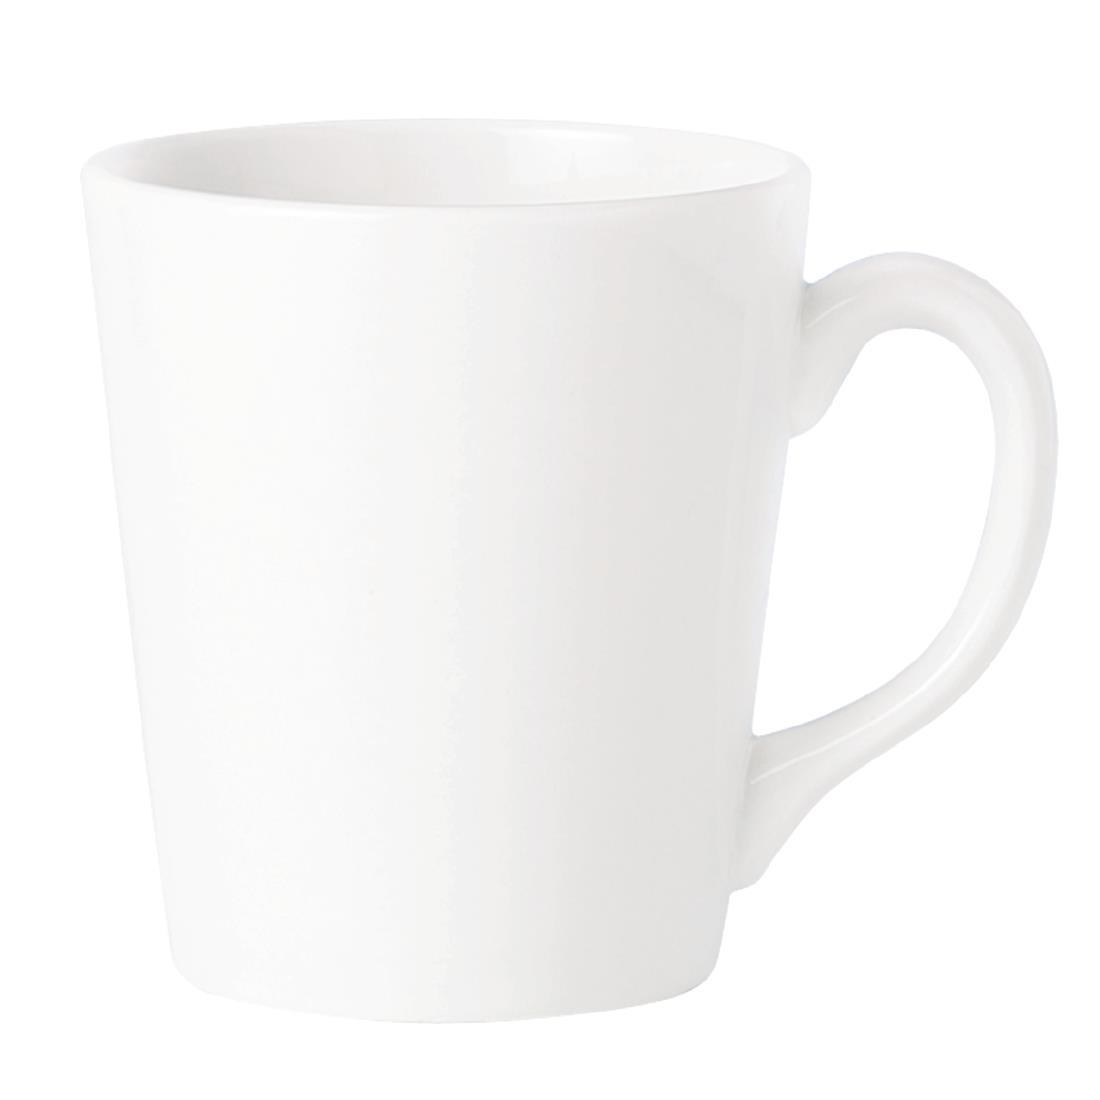 Steelite Simplicity White Coffeehouse Mugs 340ml (Pack of 36) - V9112  - 1